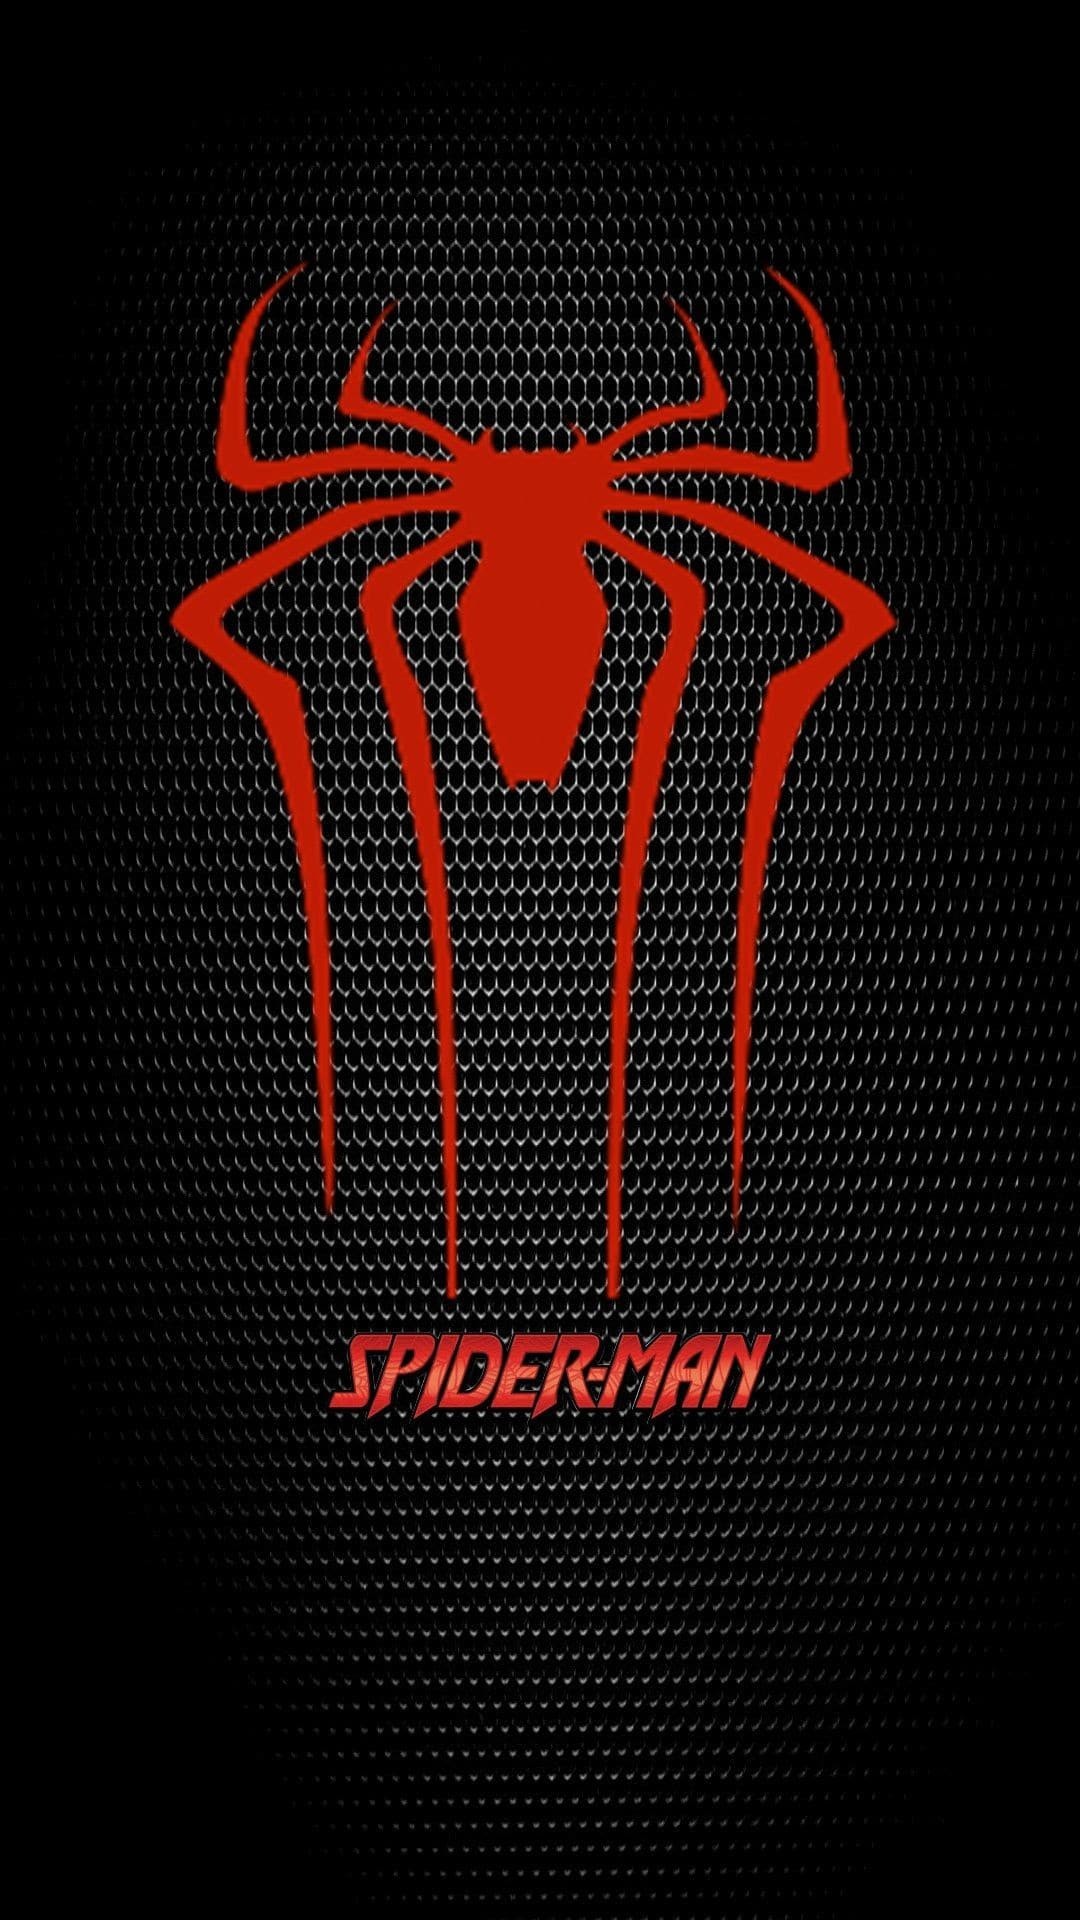 1080x1920 logos spiderman iphone 6 plus wallpapers - logo spiderma iphone 6 plus